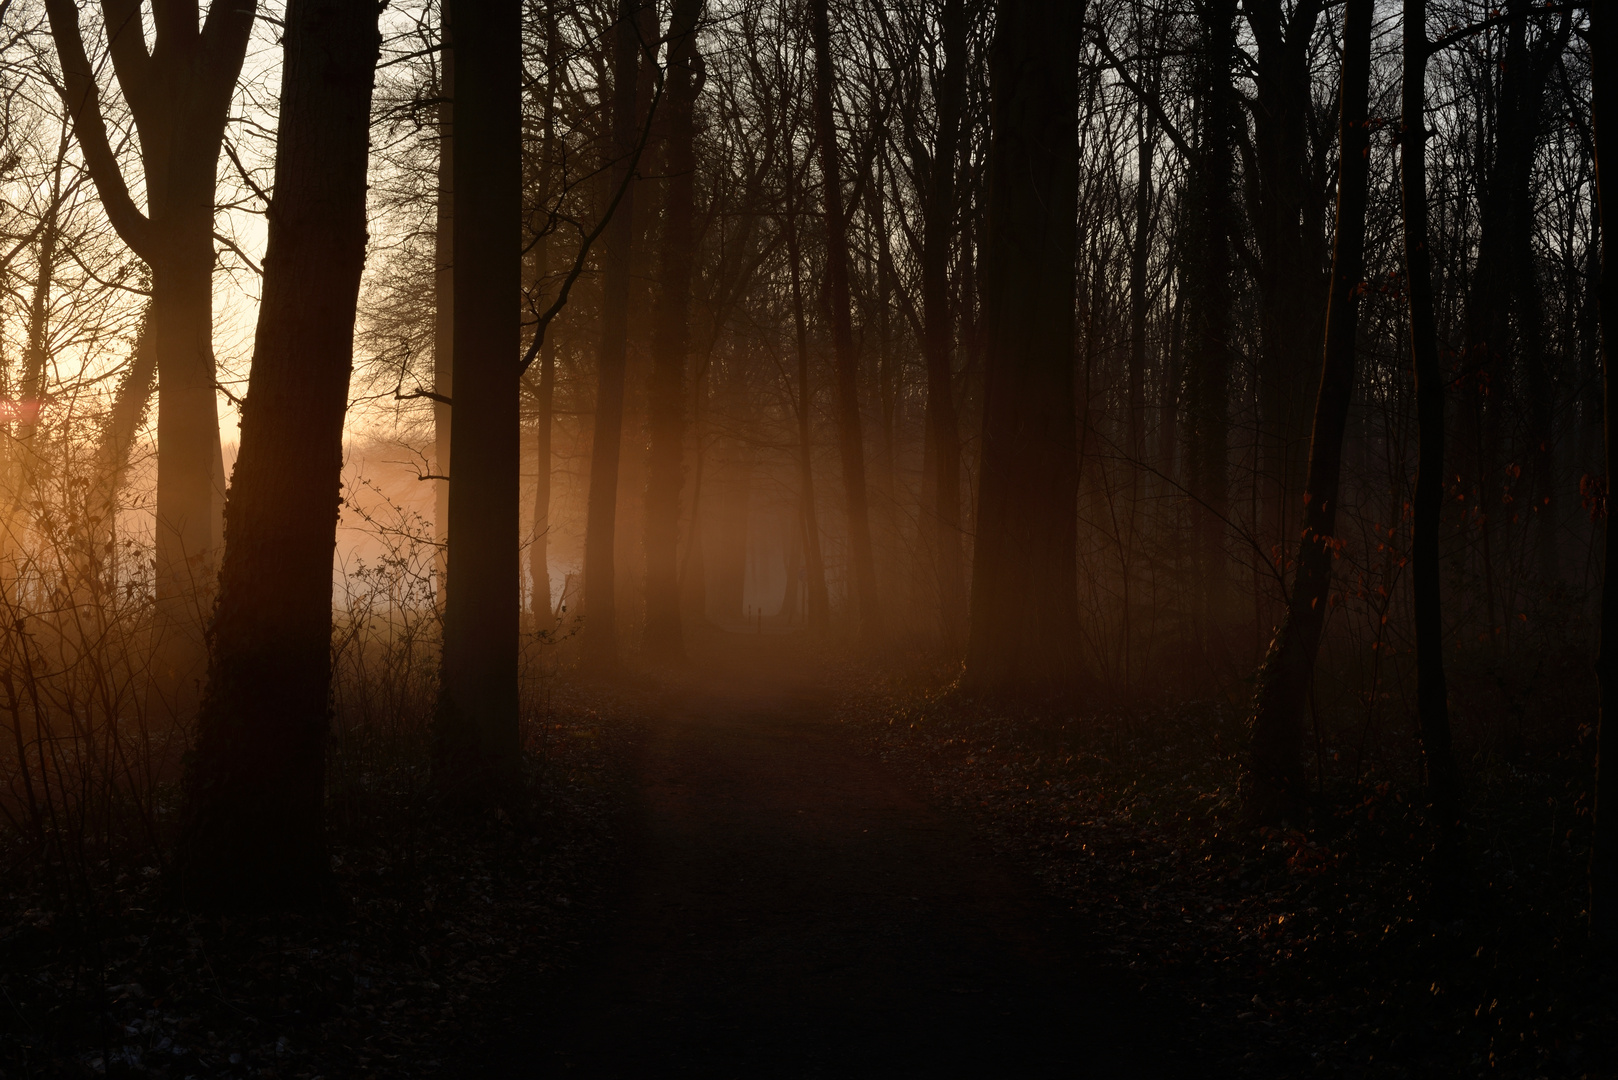 Sunrise on a misty path